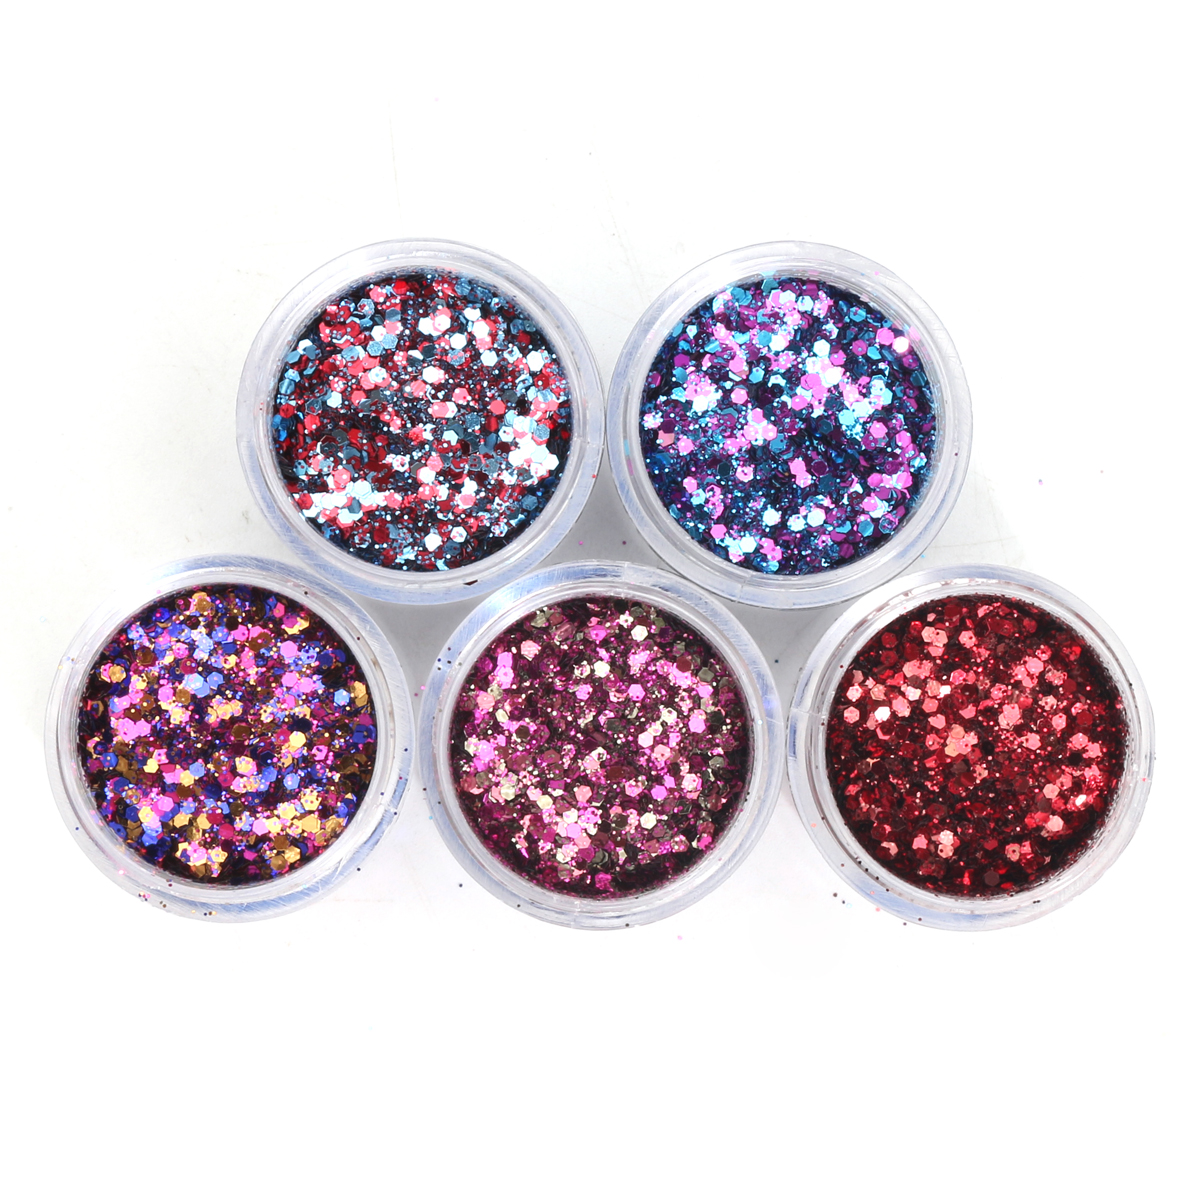 Shining-Mixed-Glitter-Powder-Sequins-Decoration--3D-Dust-Red-Purple-Halloween-Nail-Art-Ornaments-1184097